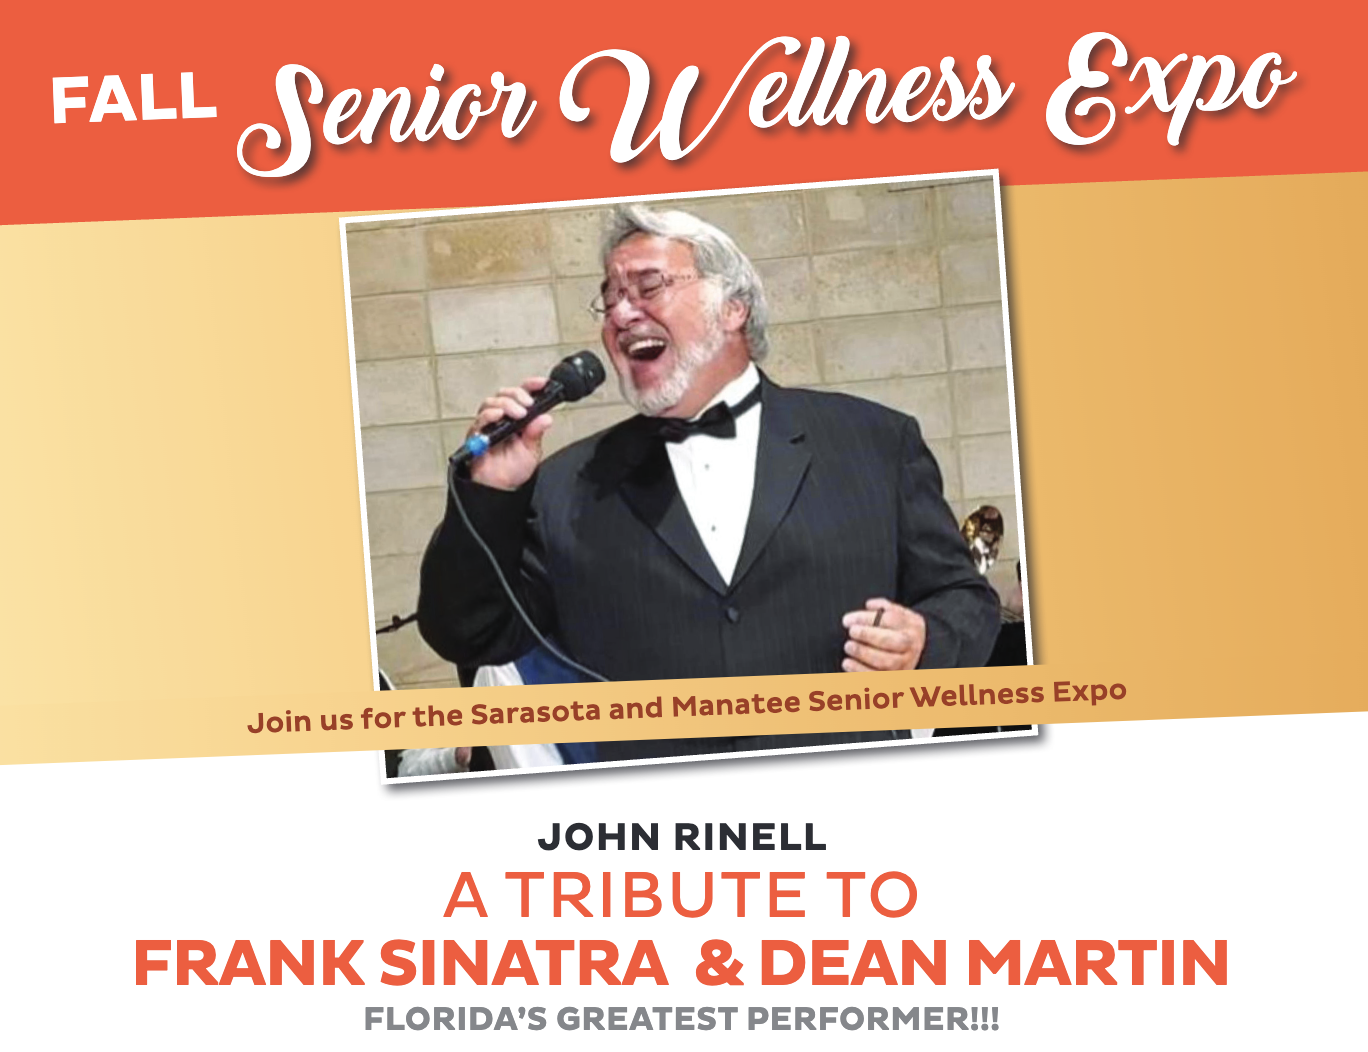 John Rinell will be performing at the upcoming Fall Senior Wellness Expo.